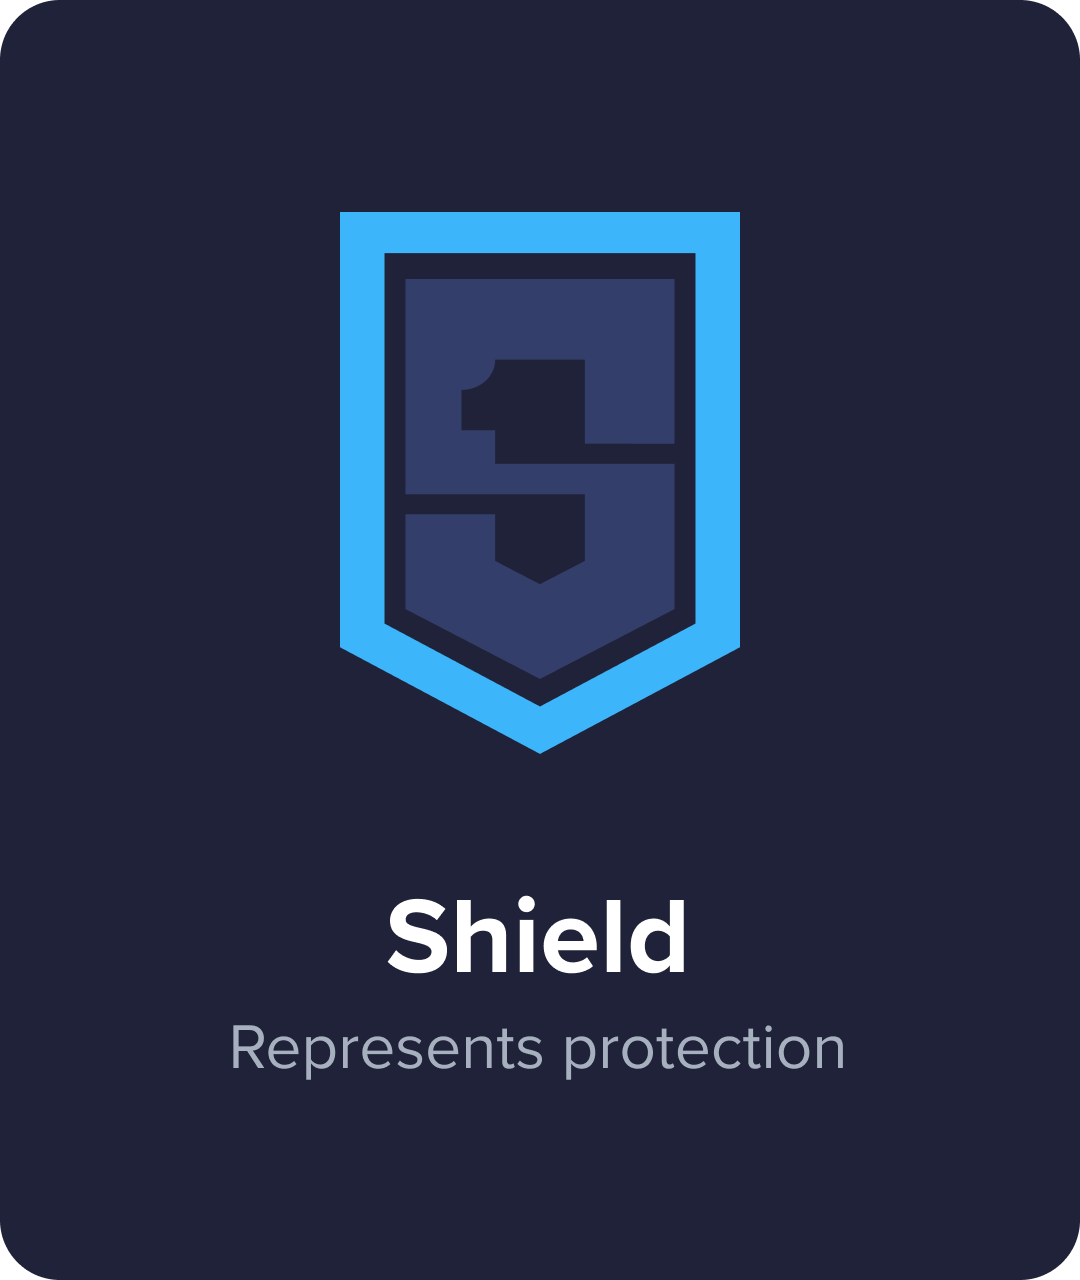 shield - represents protection